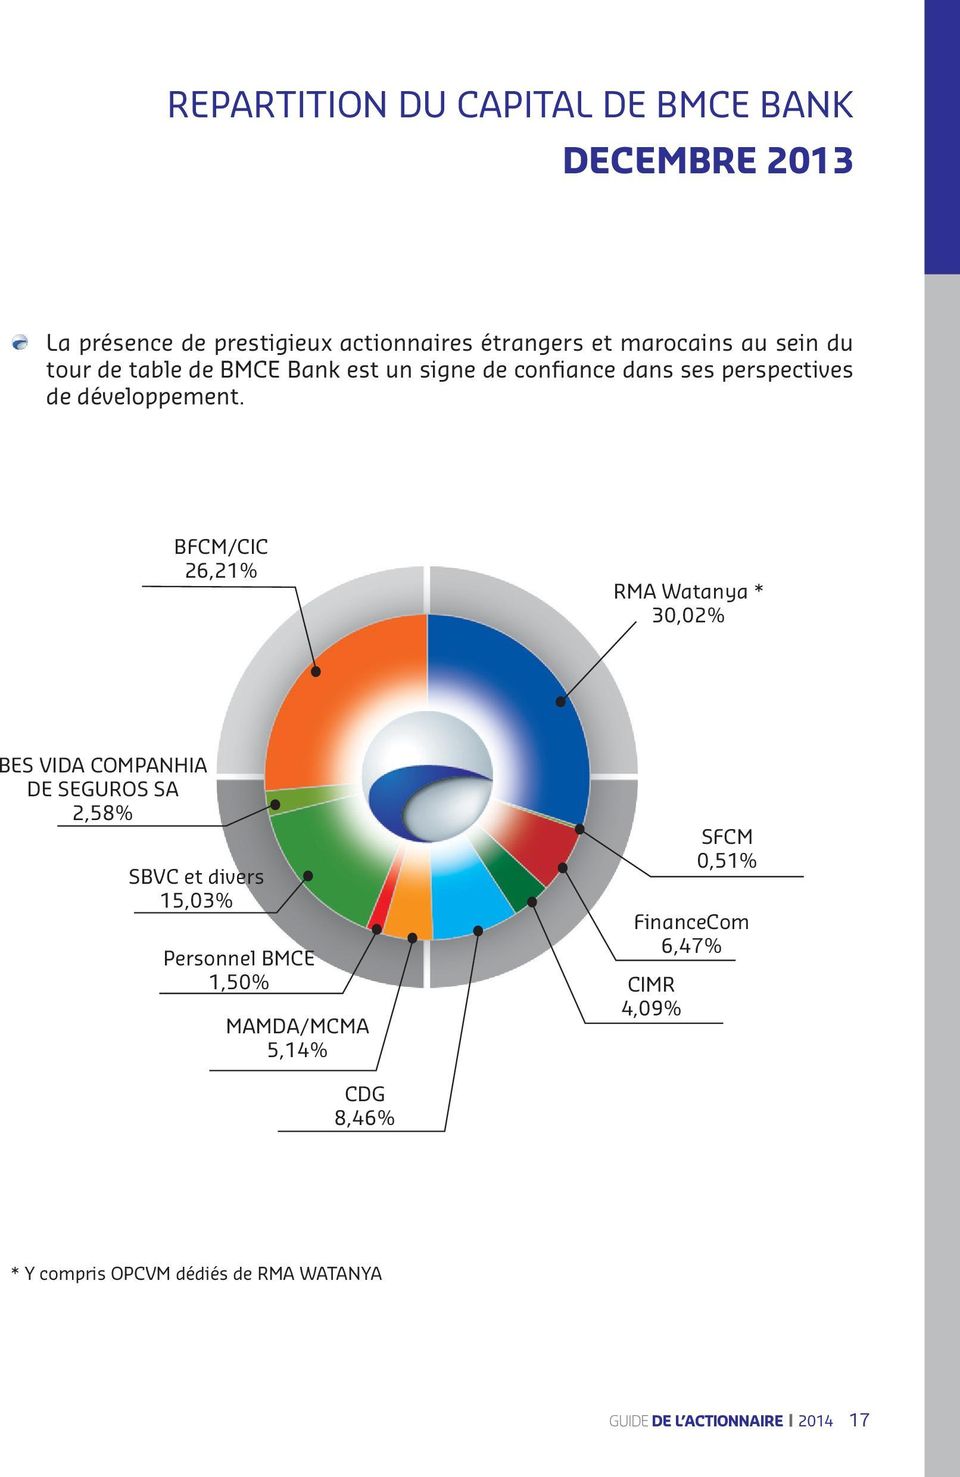 BFCM/CIC 26,21% RMA Watanya * 30,02% BES VIDA COMPANHIA DE SEGUROS SA 2,58% SBVC et divers 15,03% Personnel BMCE